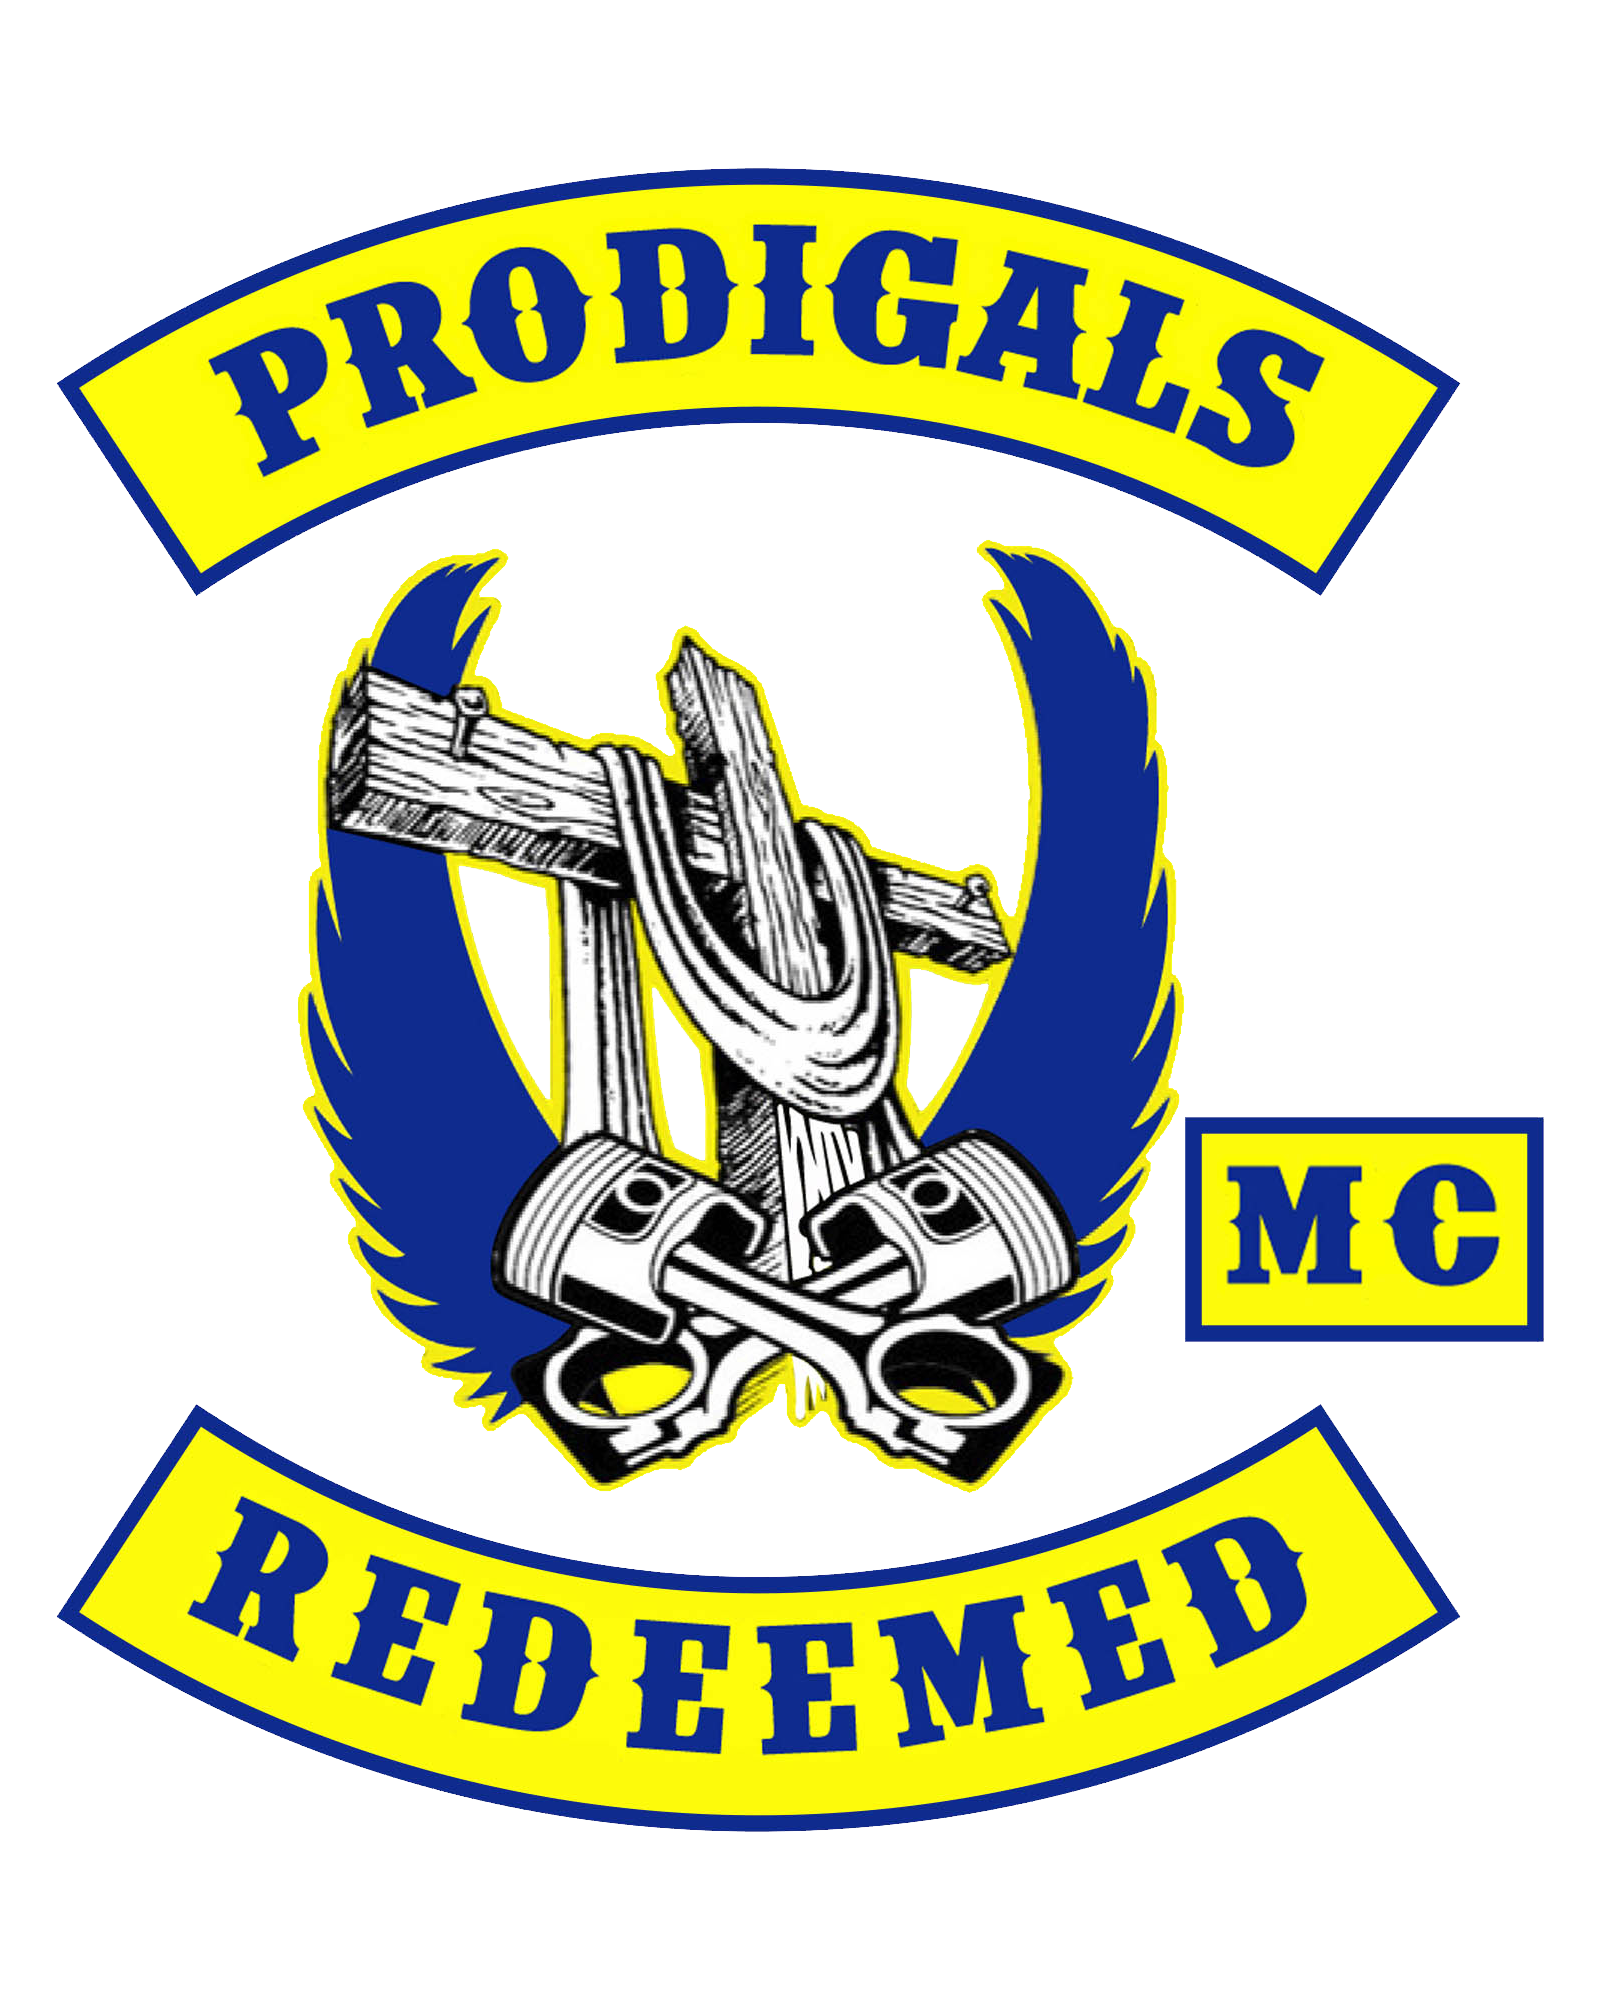 Prodigals Redeemed MC - Christian Motorcycle Club